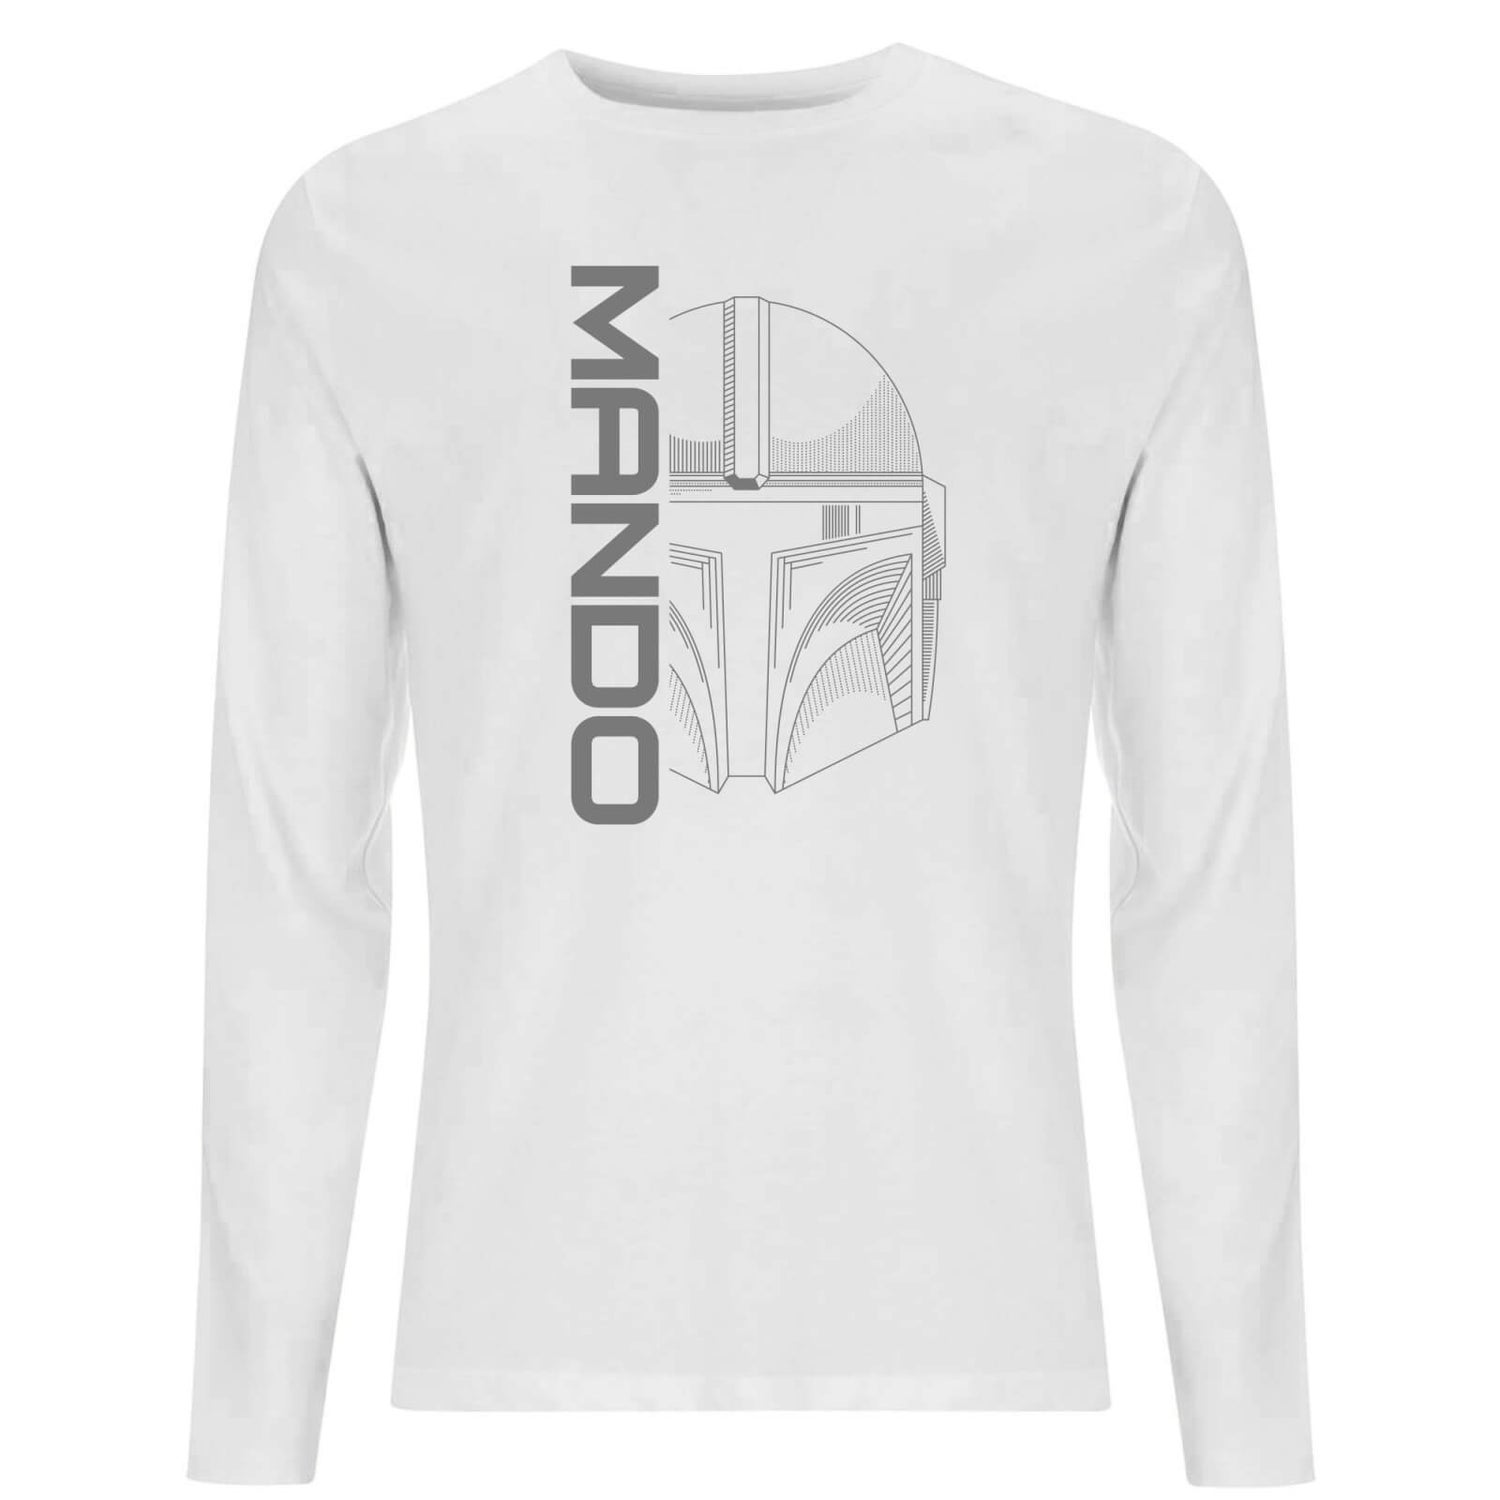 Star Wars The Mandalorian Mando Men's Long Sleeve T-Shirt - White